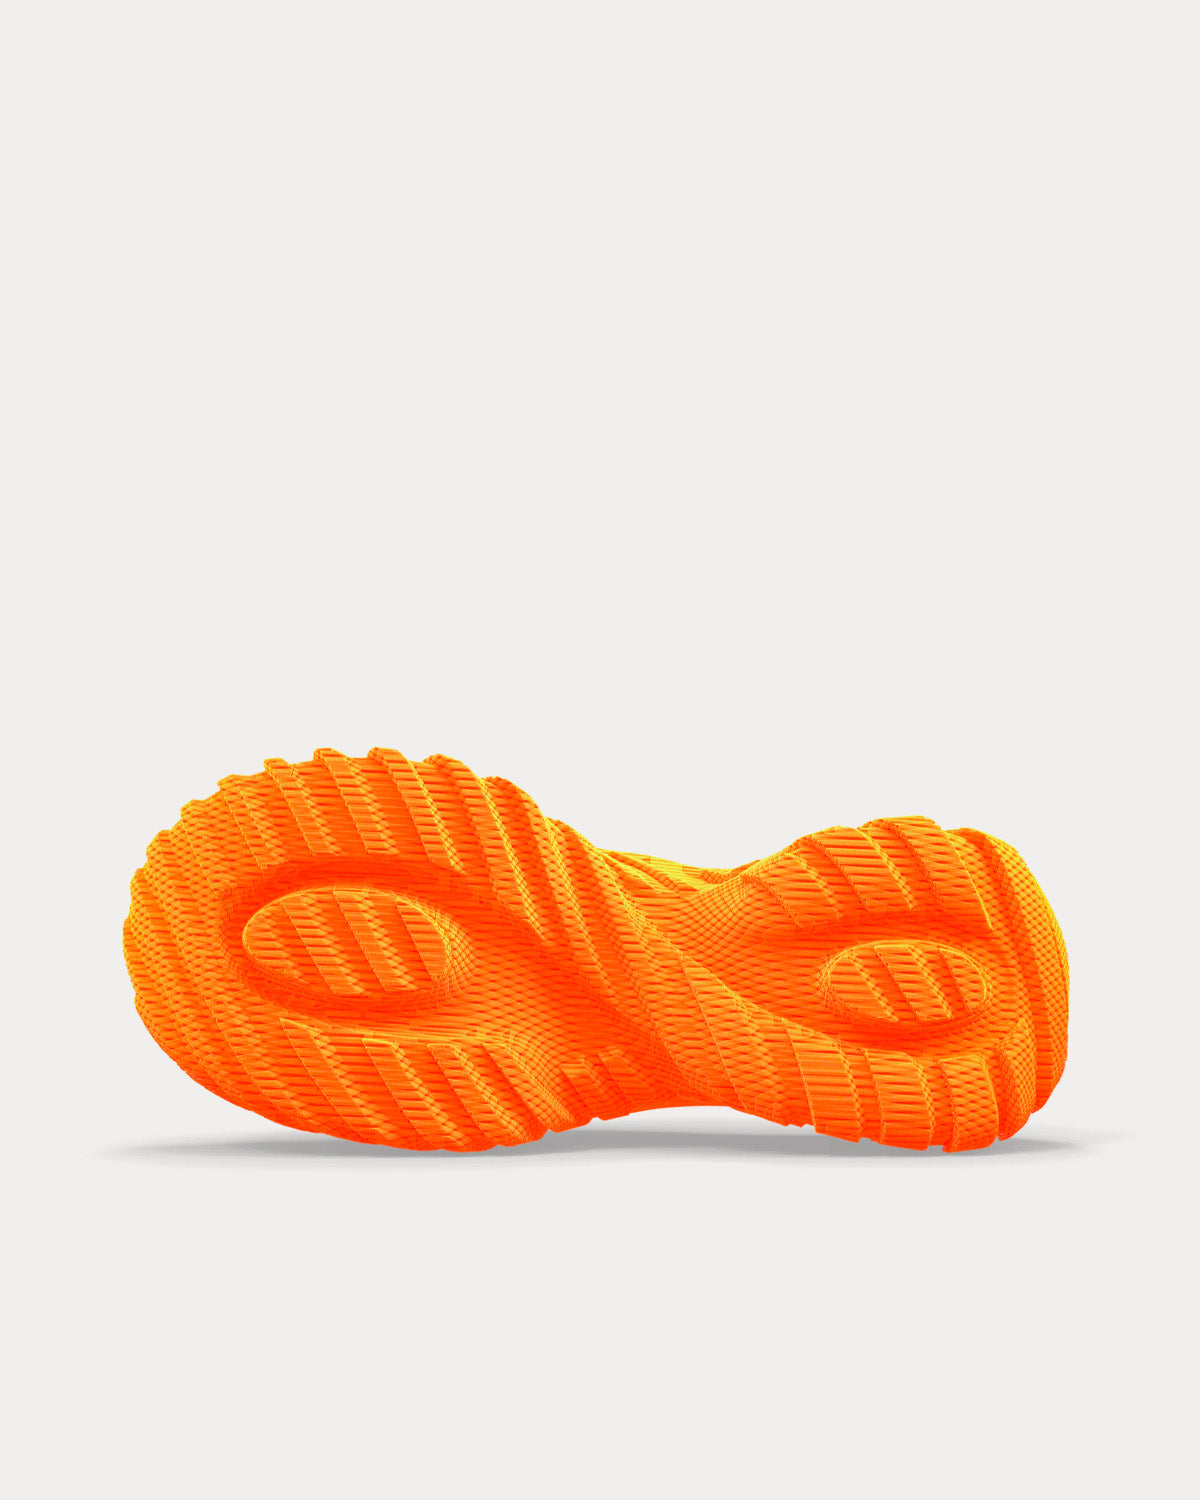 MLLN - Próta Orange Slip On Sneakers